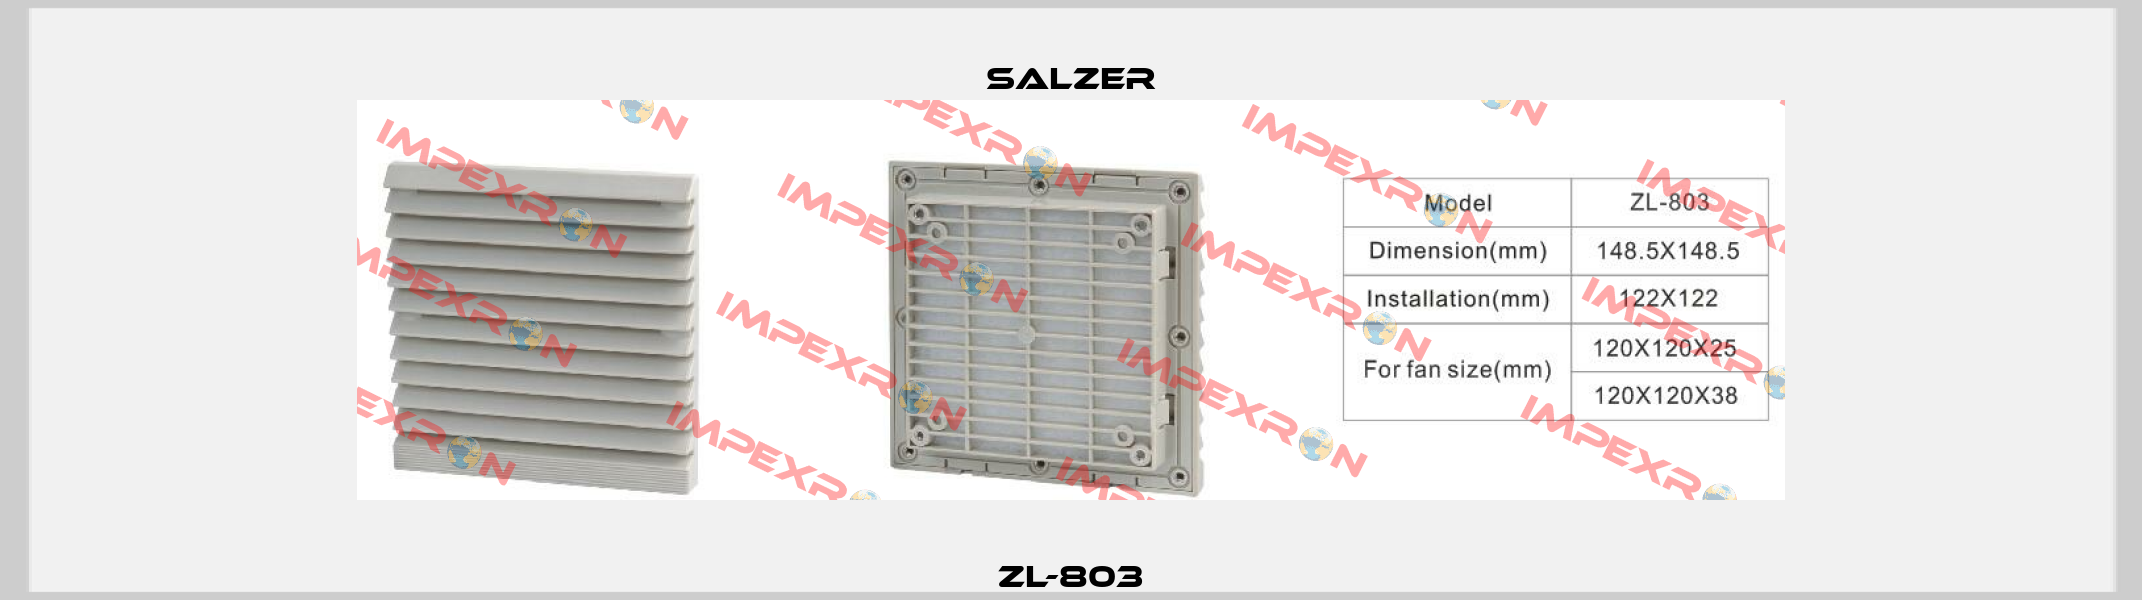 ZL-803 Salzer